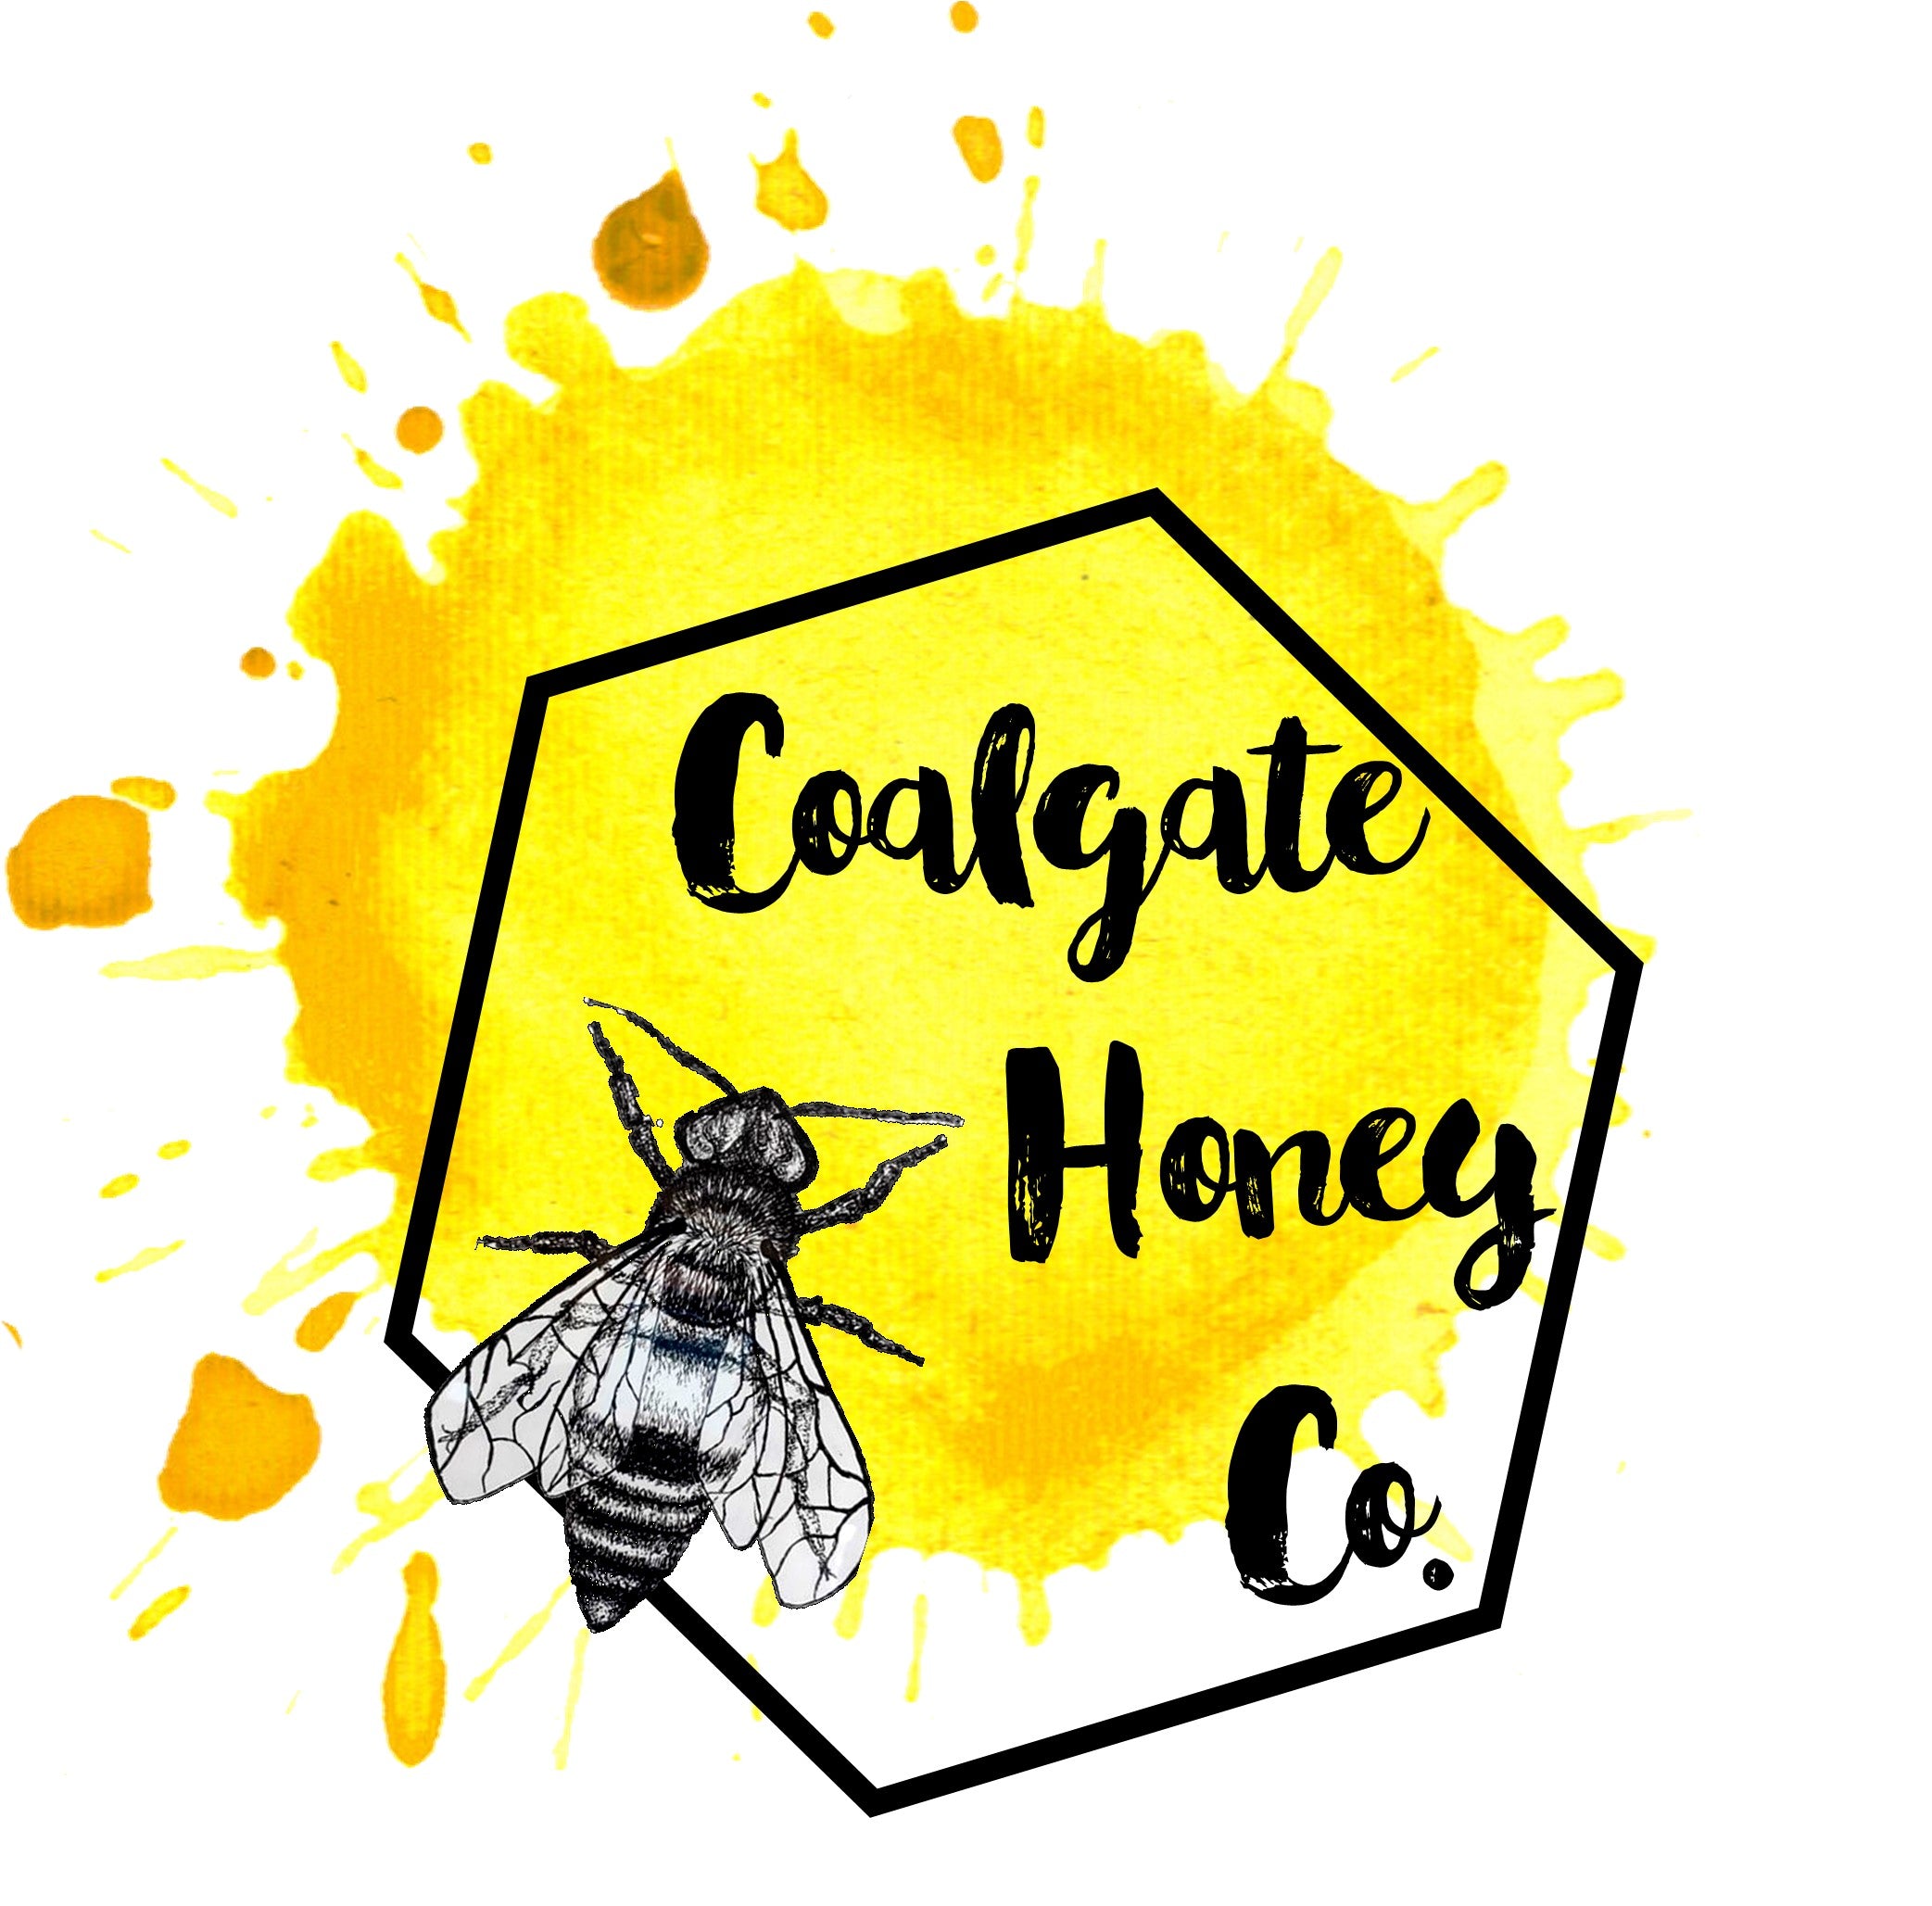 Coalgate Honey Co.